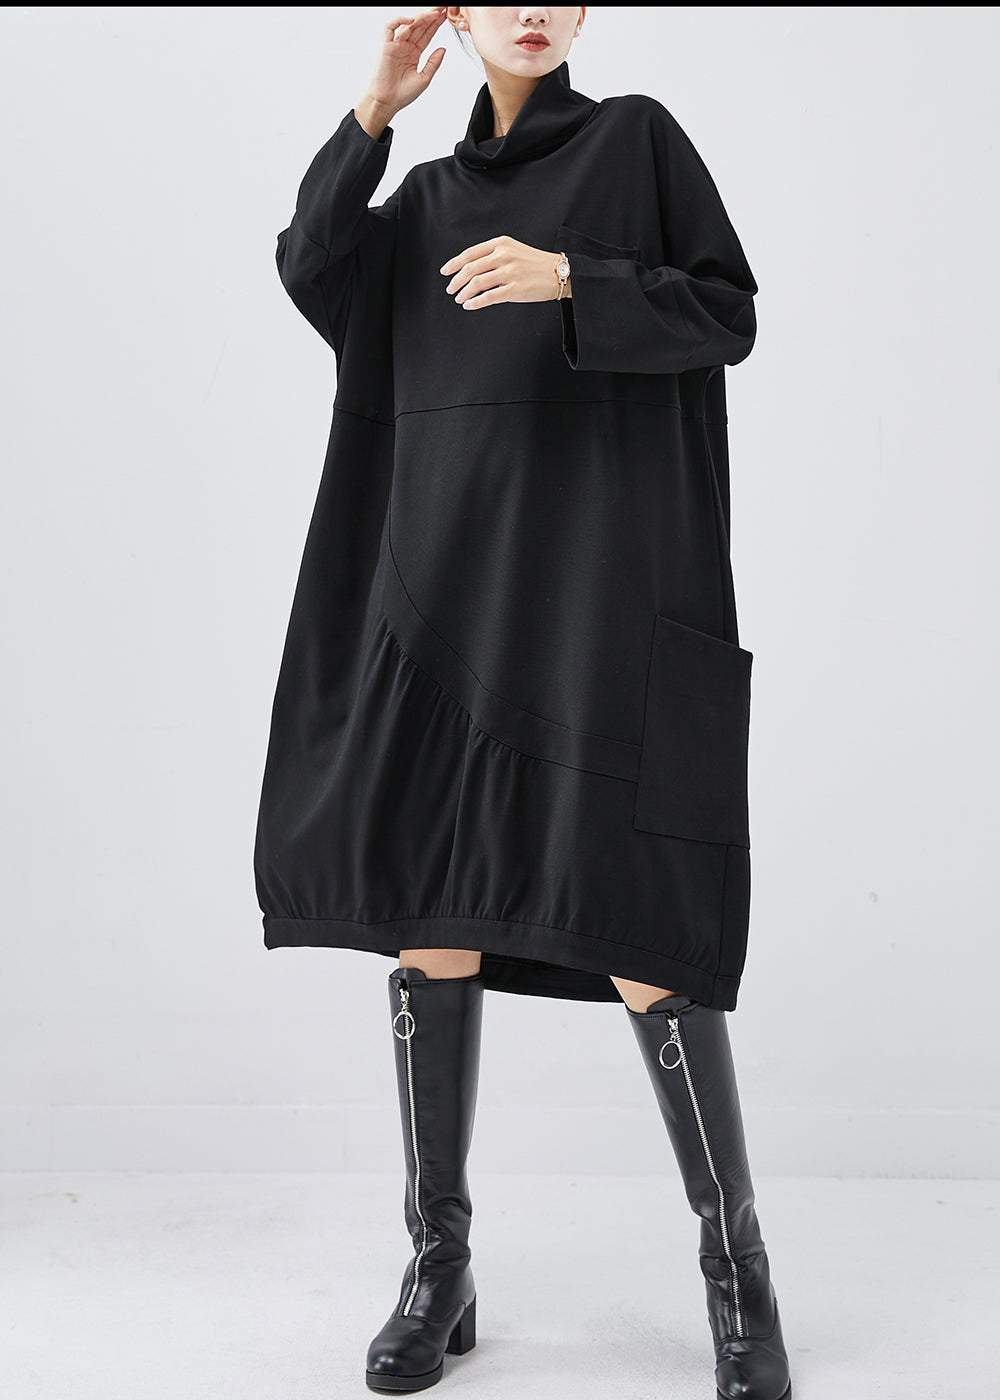 Boutique Black Turtle Neck Patchwork Warm Fleece Dress Winter